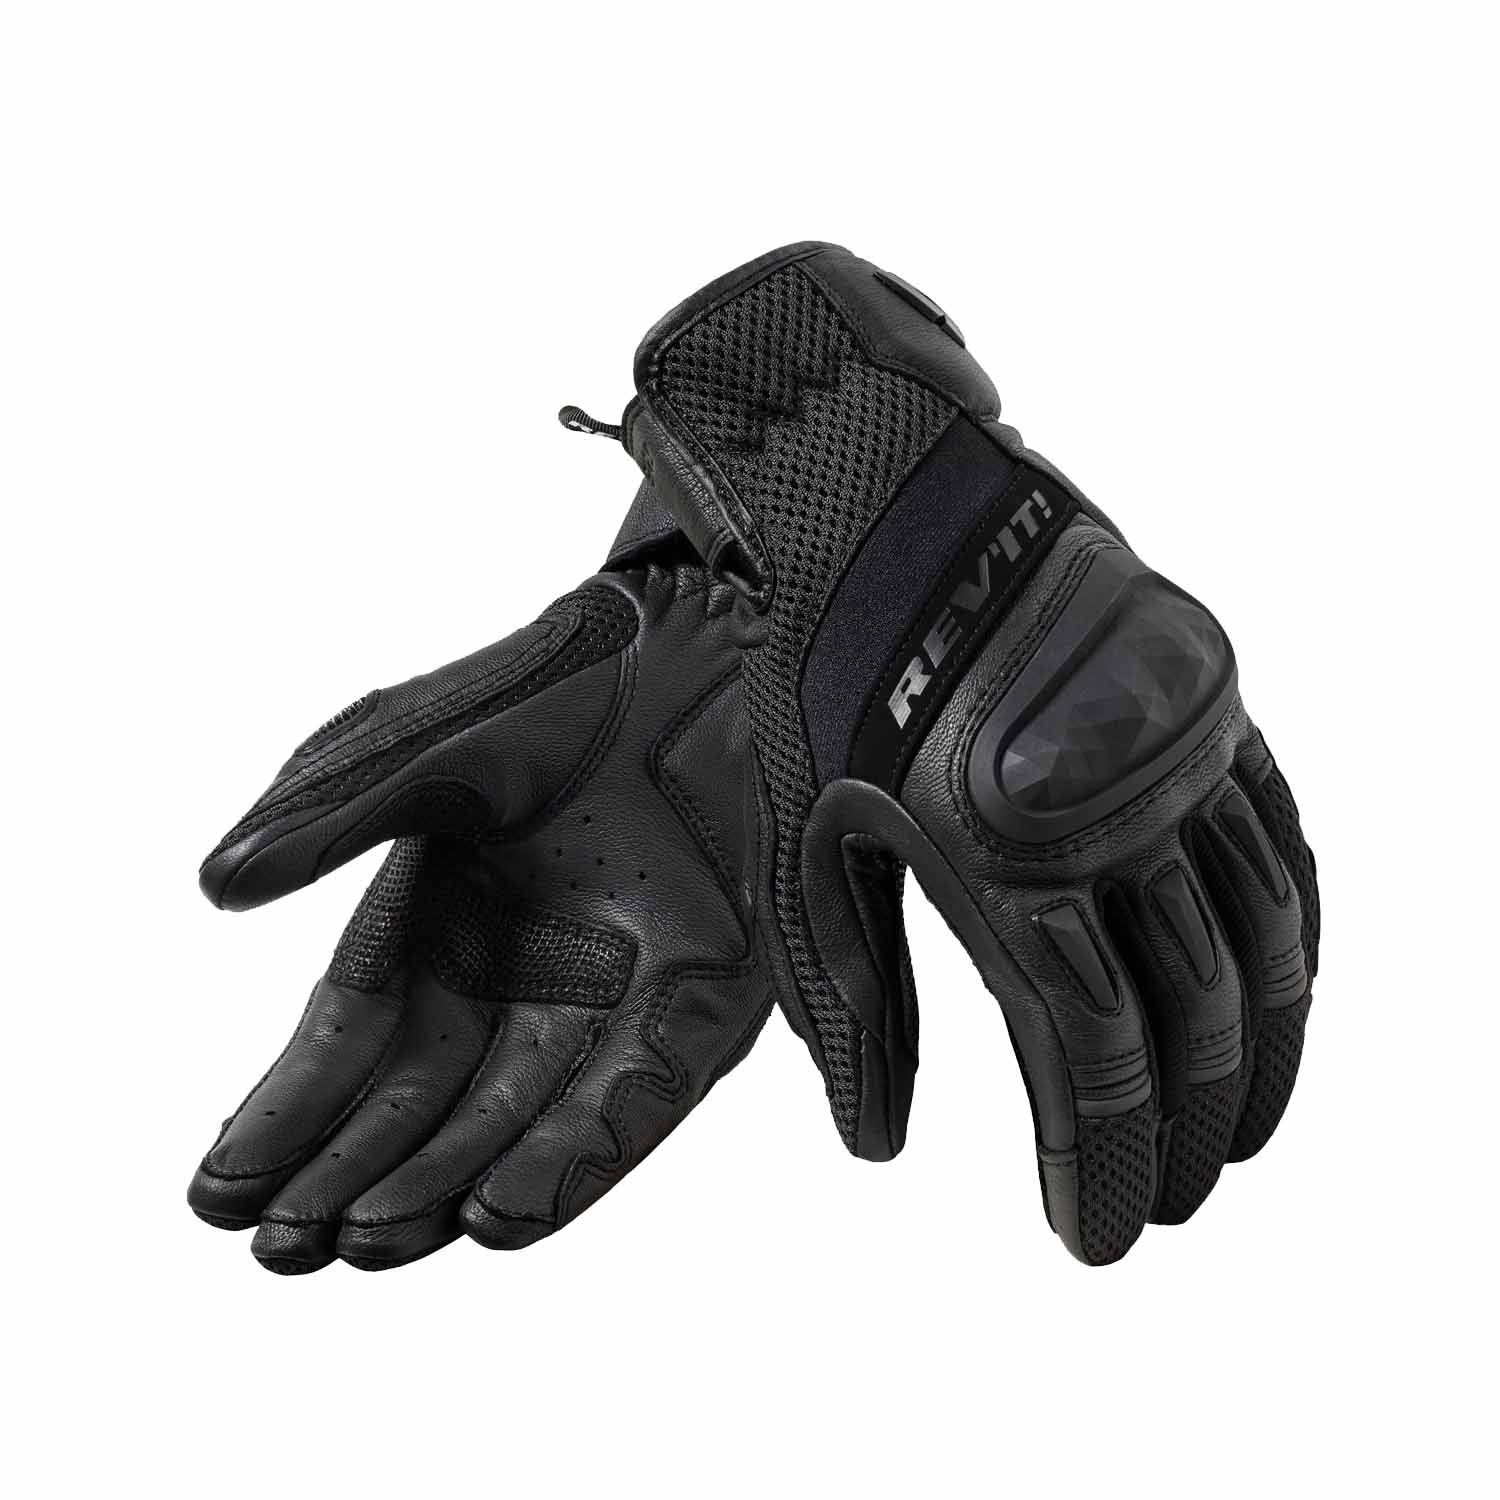 Image of REV'IT! Dirt 4 Gloves Ladies Black Size XS ID 8700001378109